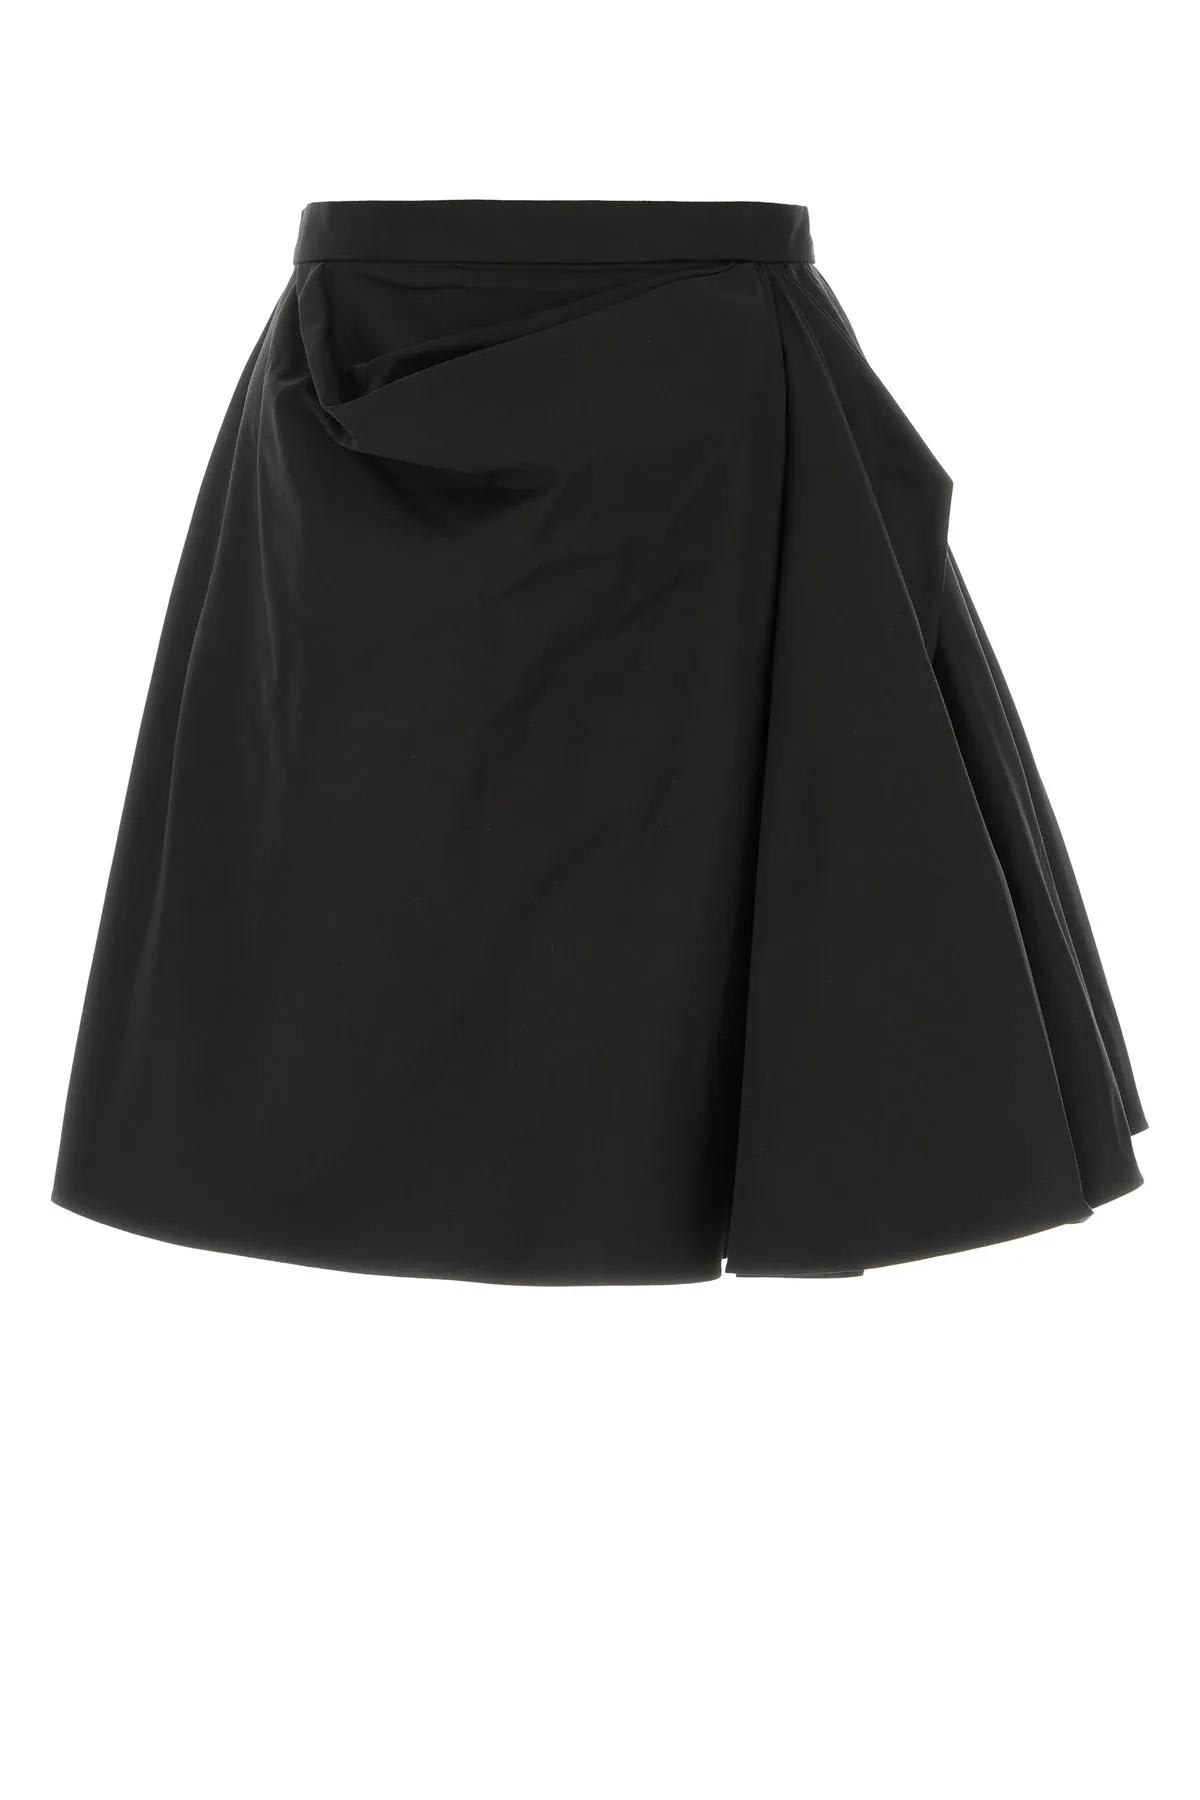 Alexander Mcqueen Black Cotton Skirt